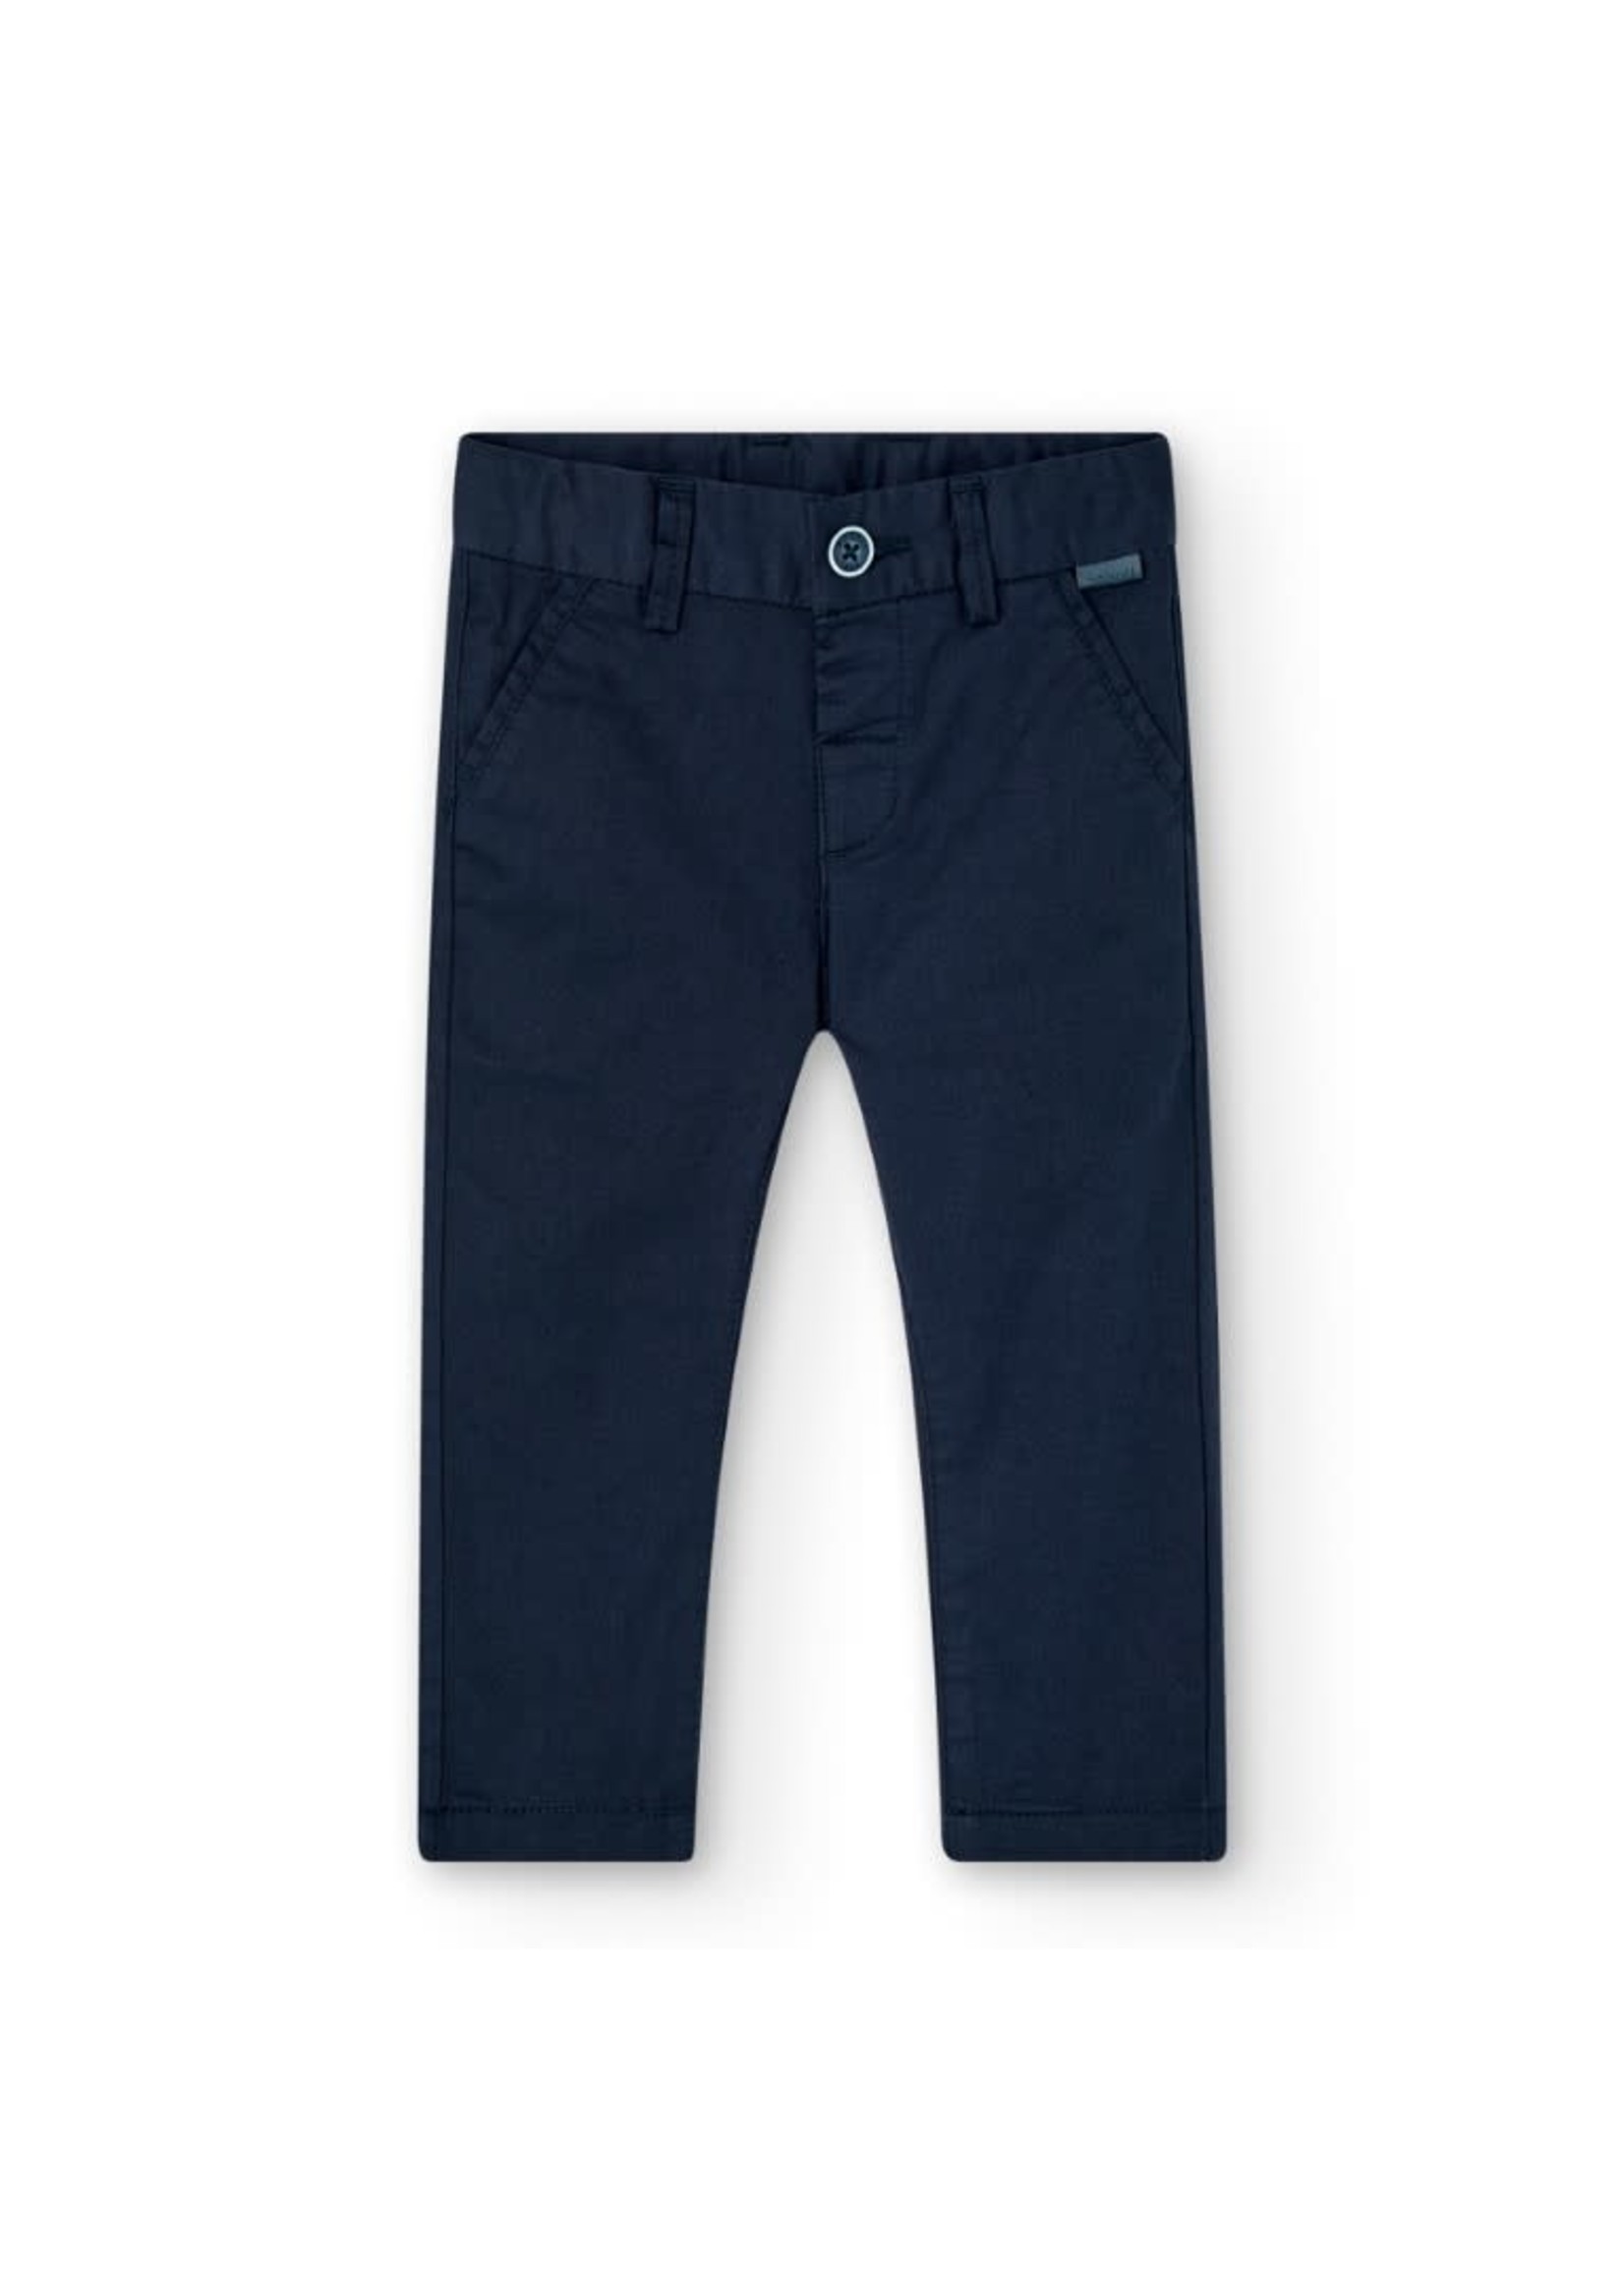 Boboli Stretch satin trousers for baby navy 716026